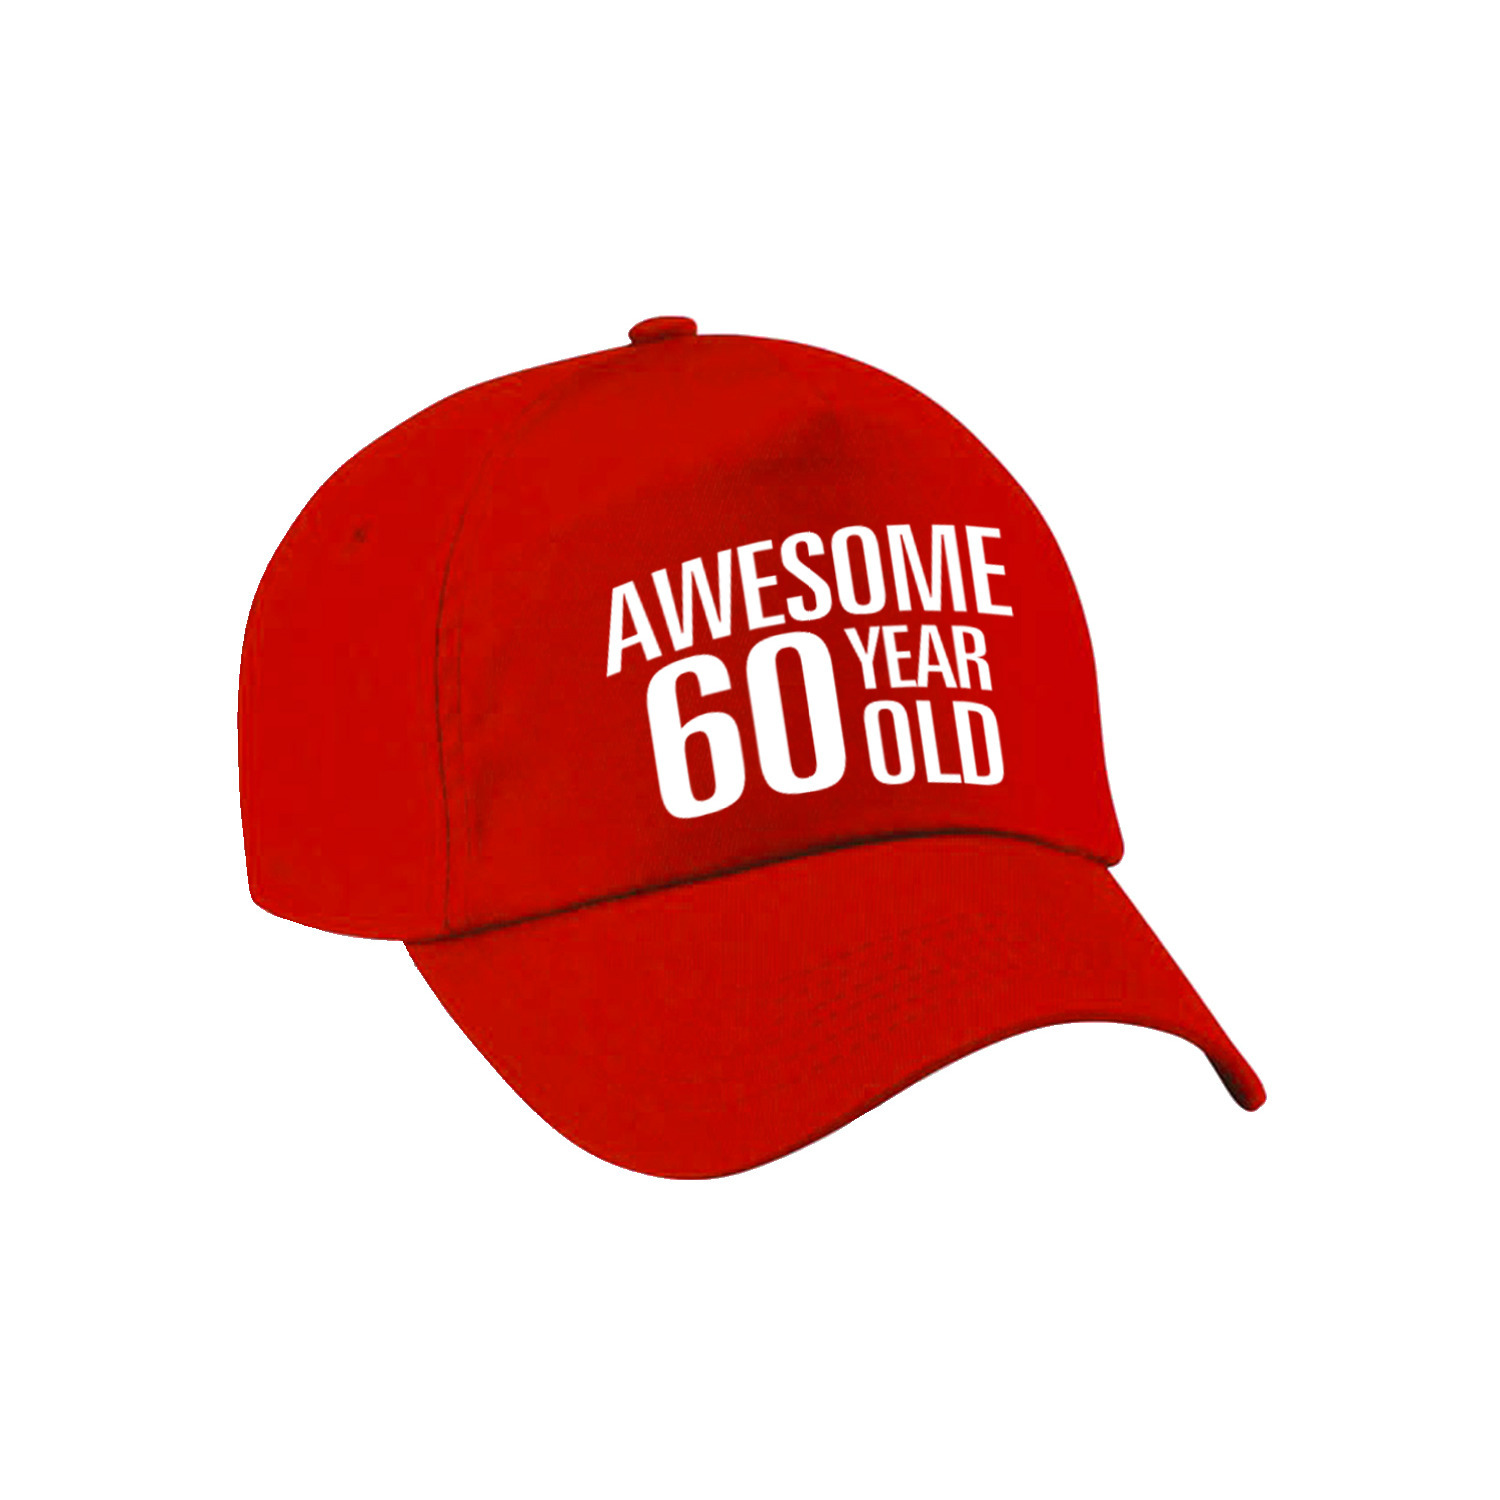 Awesome 60 year old verjaardag pet / cap rood voor dames en heren